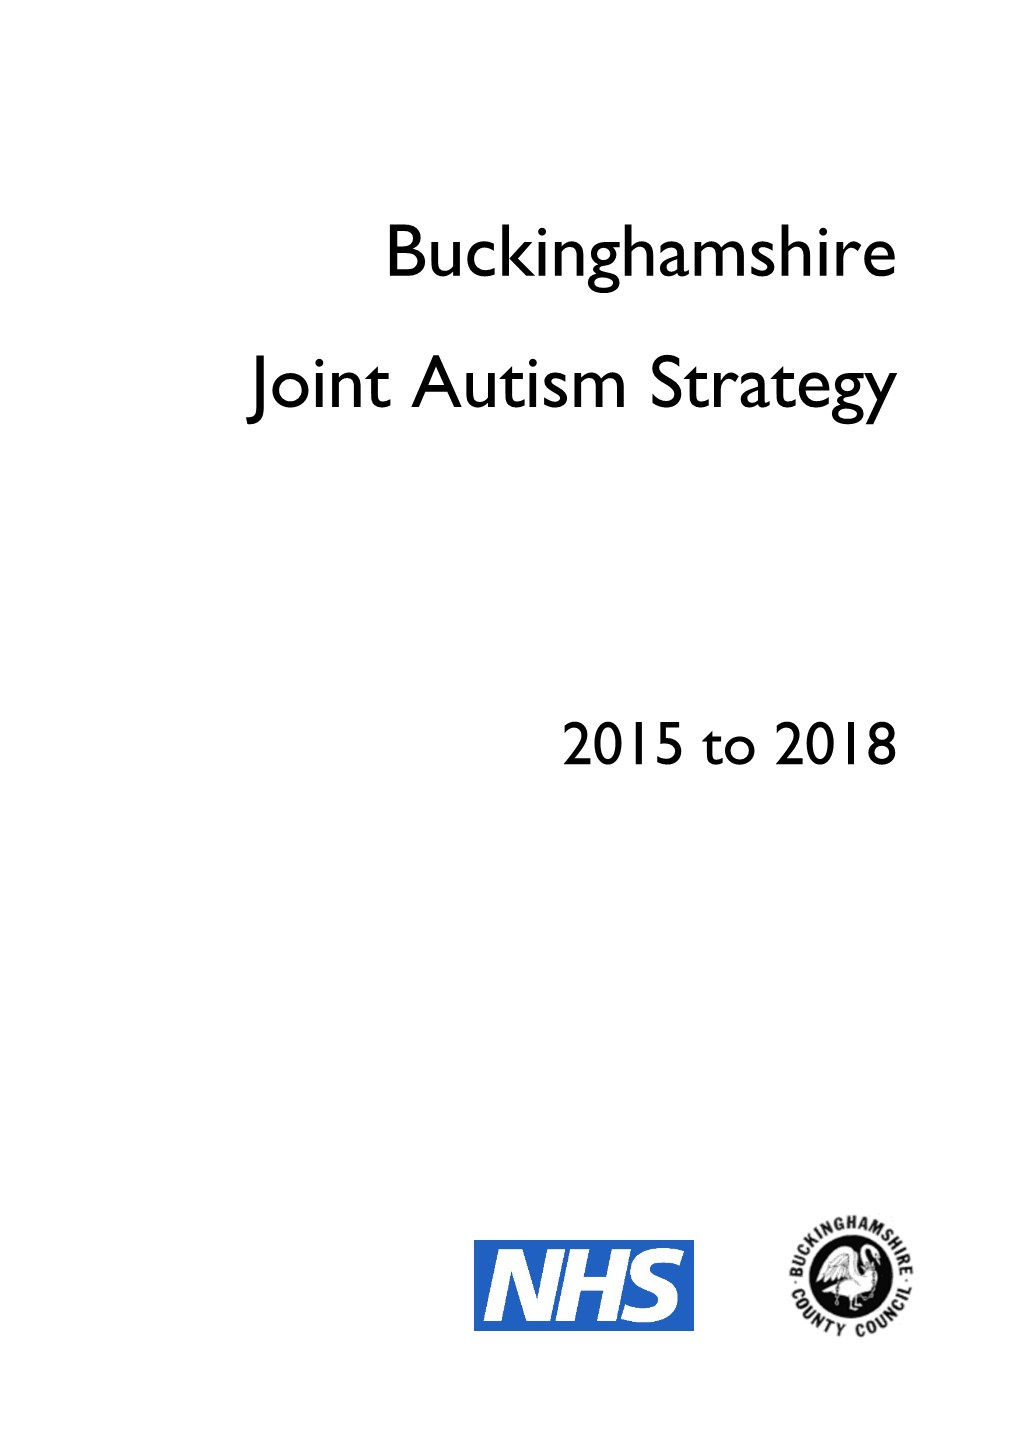 Buckinghamshire Joint Autism Strategy